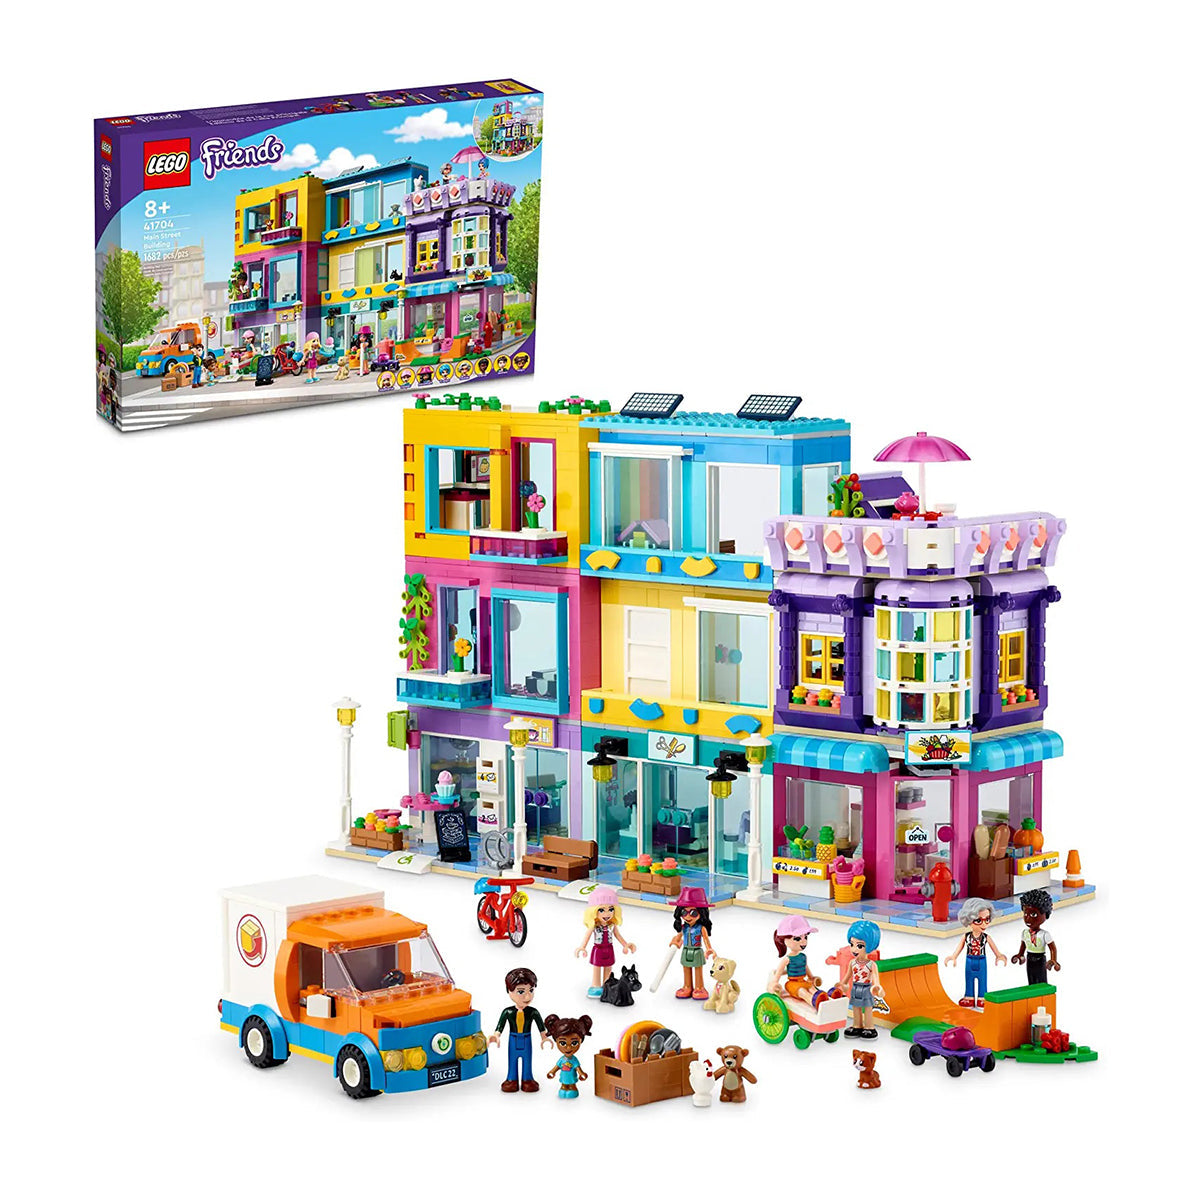 LEGO Friends - Main Street Building 41704